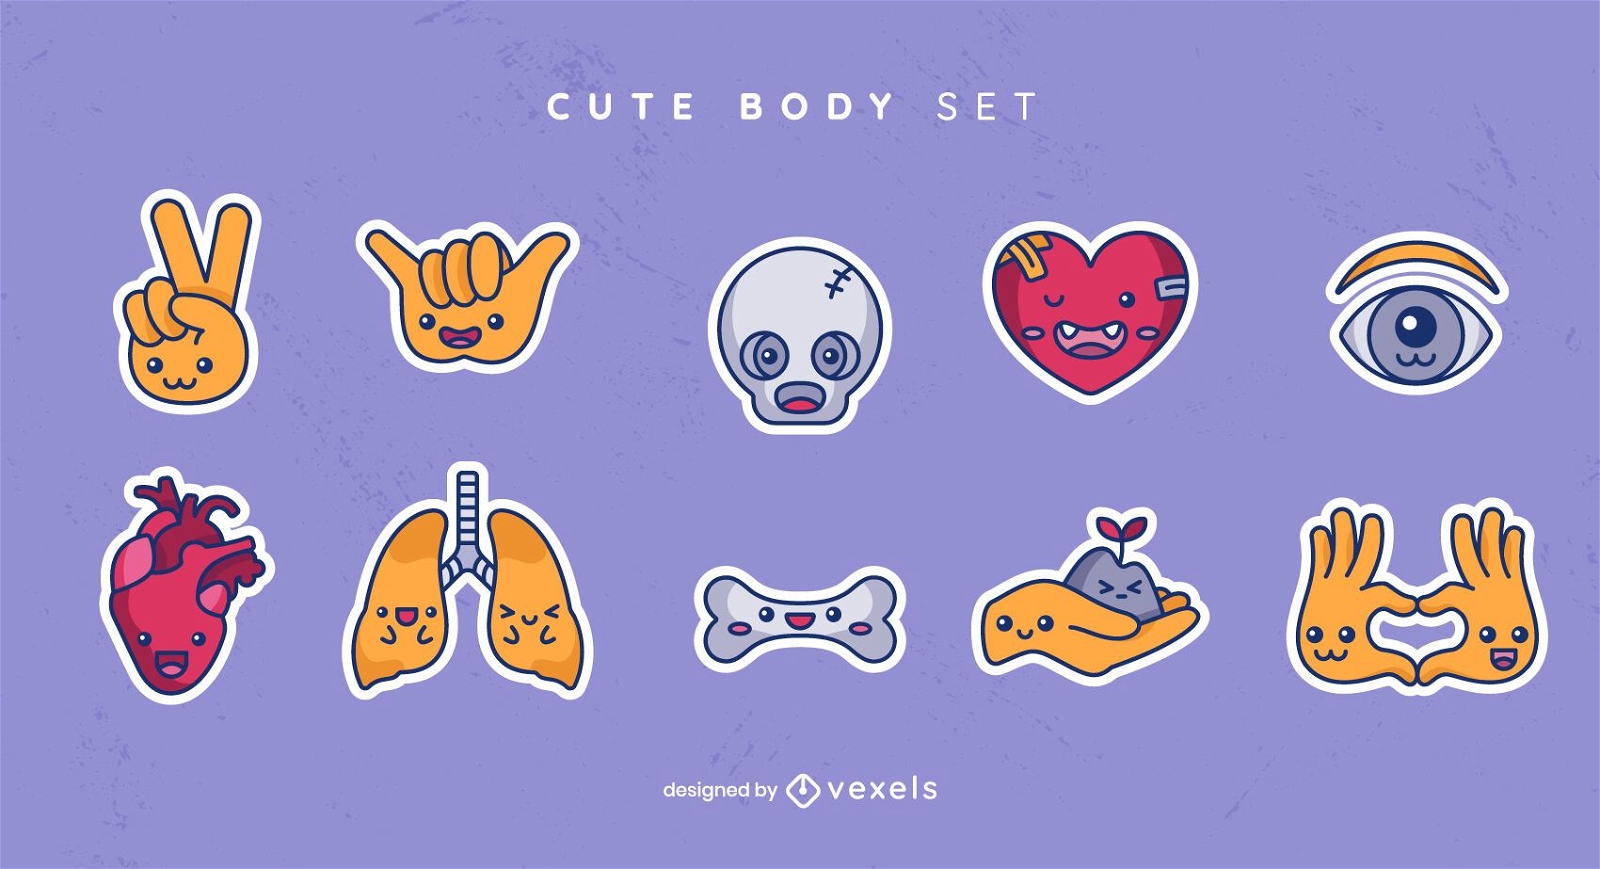 Cute body sticker set